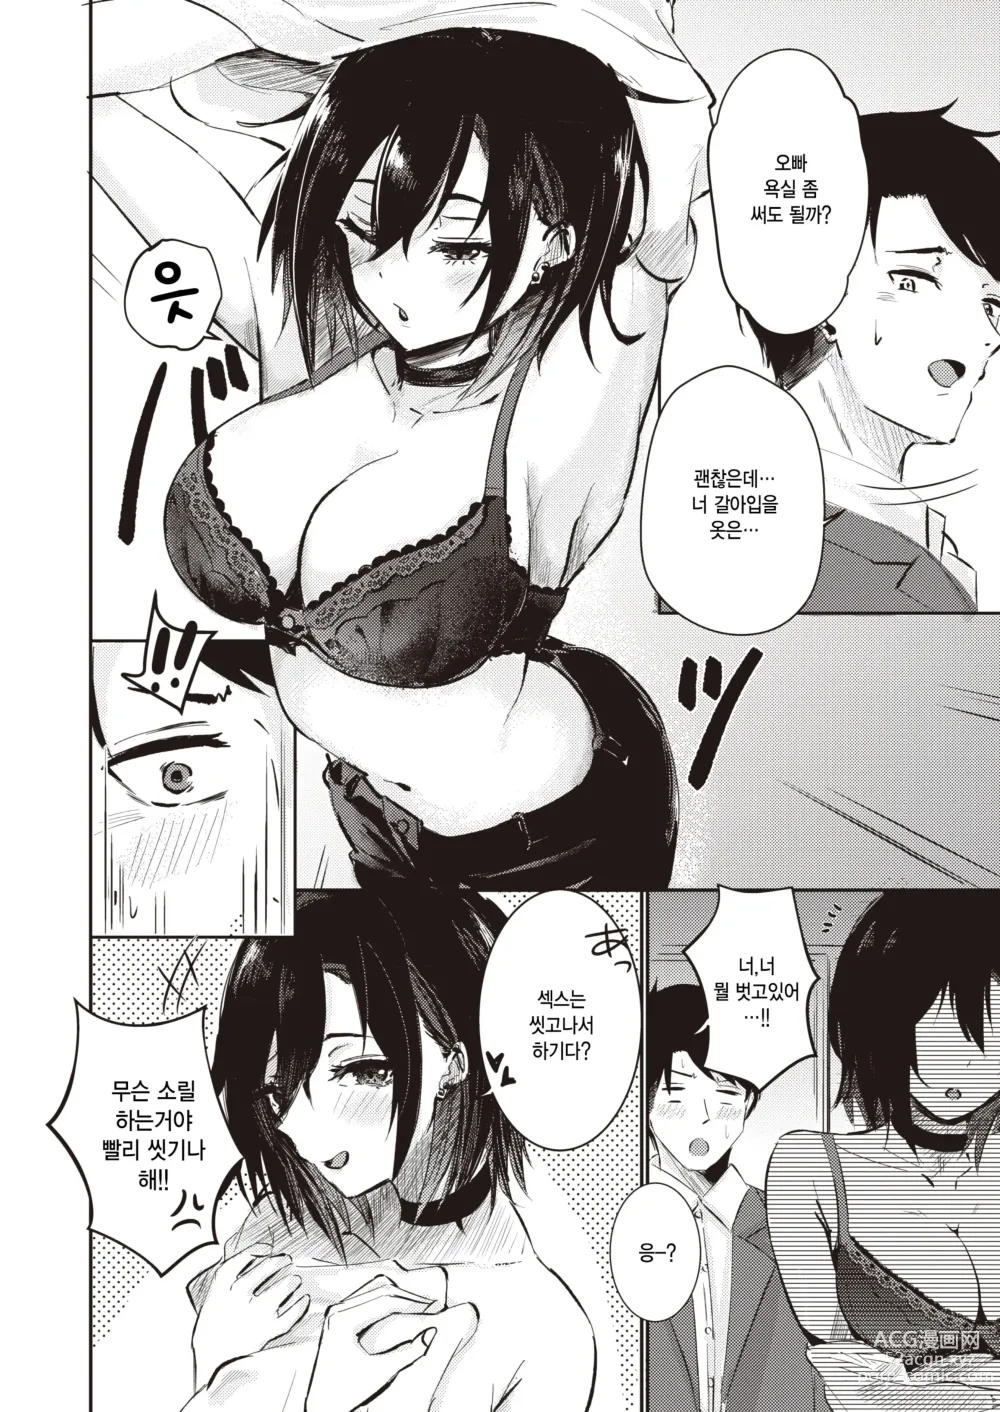 Page 4 of manga Neko to Kimagure